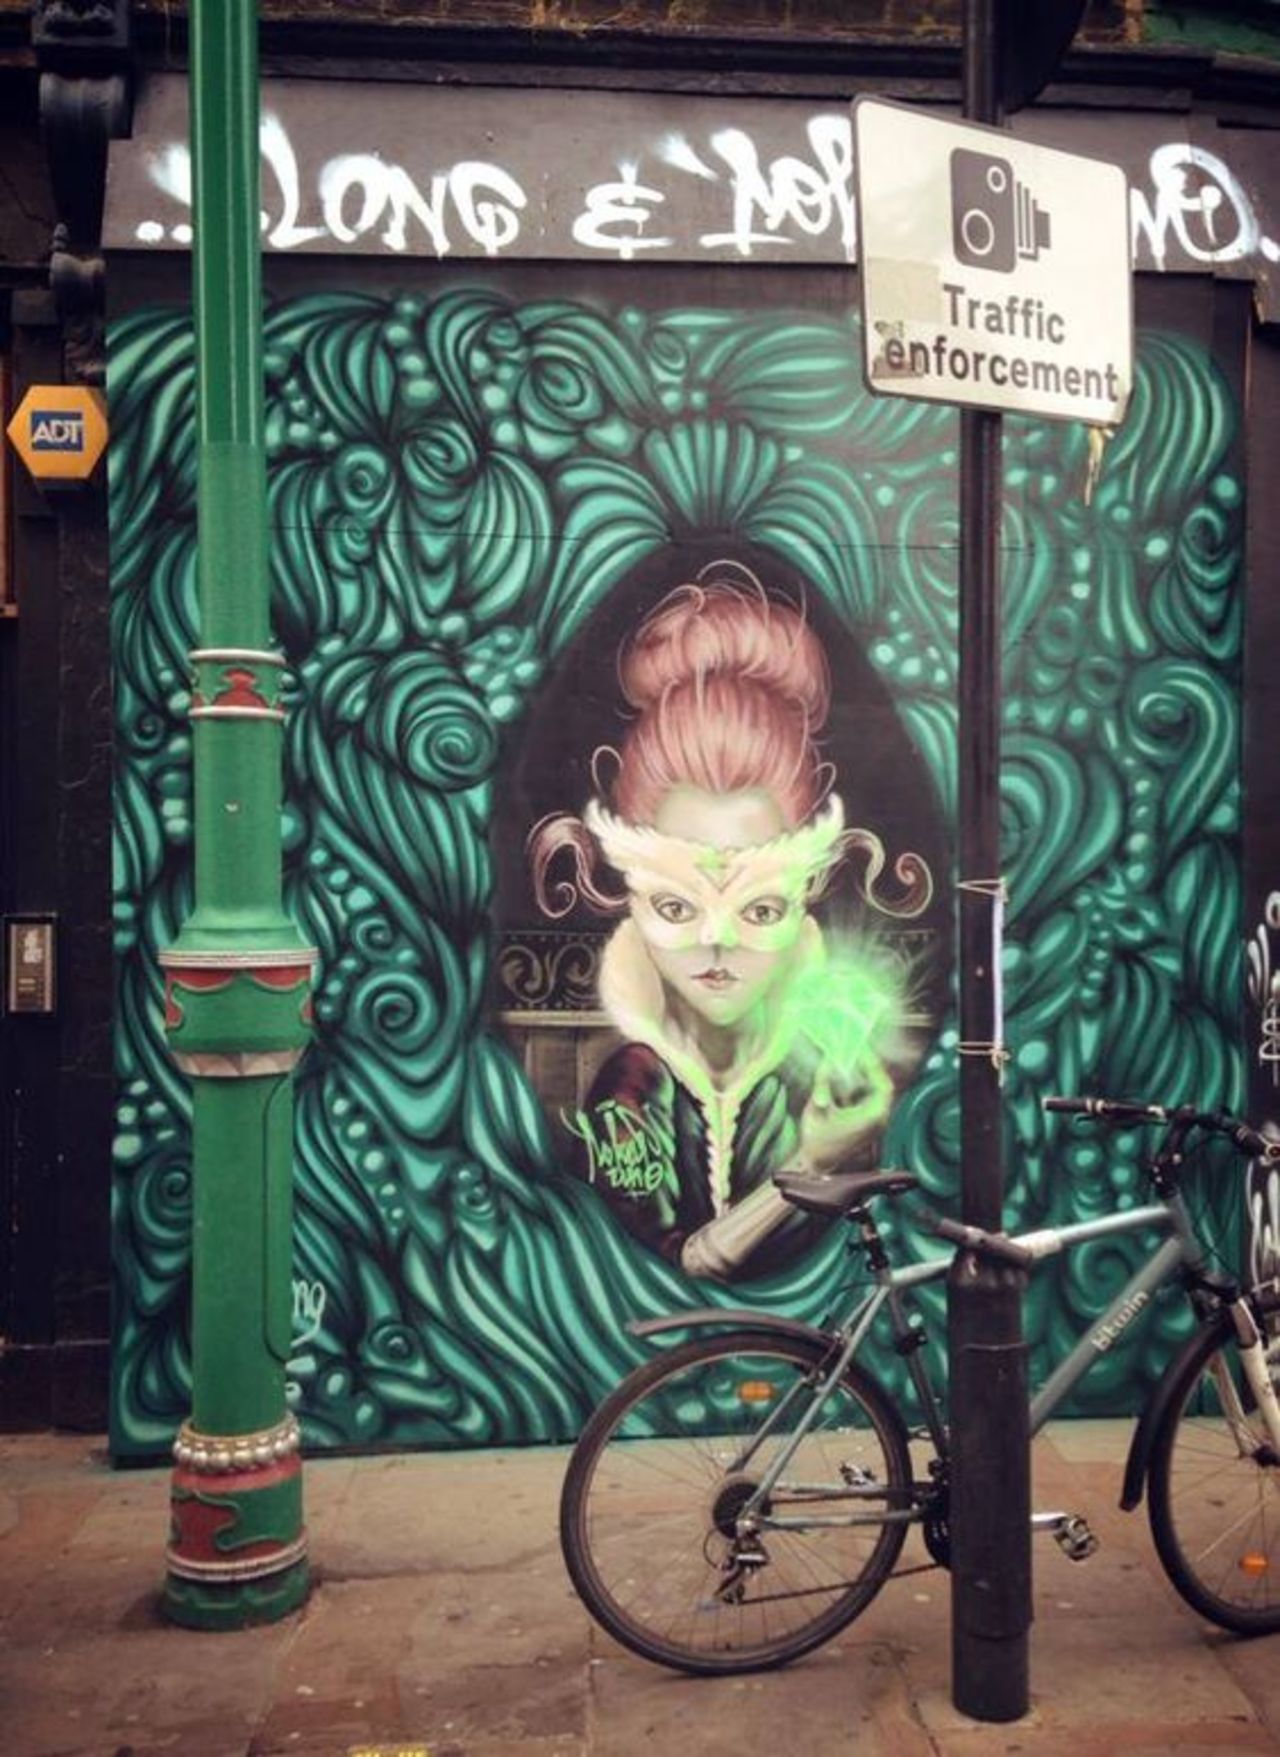 The Jade Secret          •         #streetart #graffiti #jade #secrets #art  . : https://t.co/r2KajRBLCF